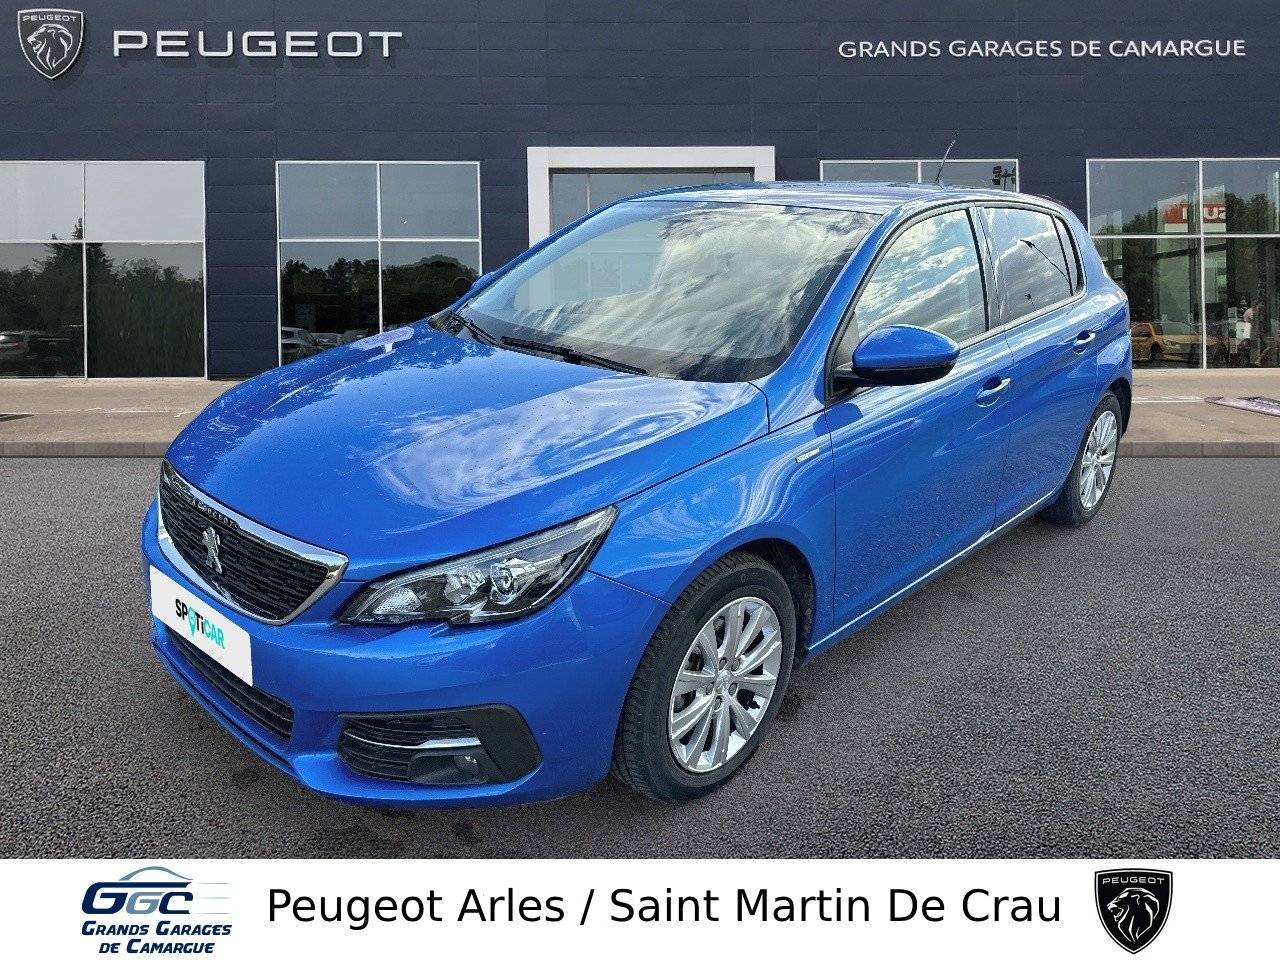 PEUGEOT 308 | 308 BlueHDi 130ch S&S EAT8 occasion - Peugeot Arles